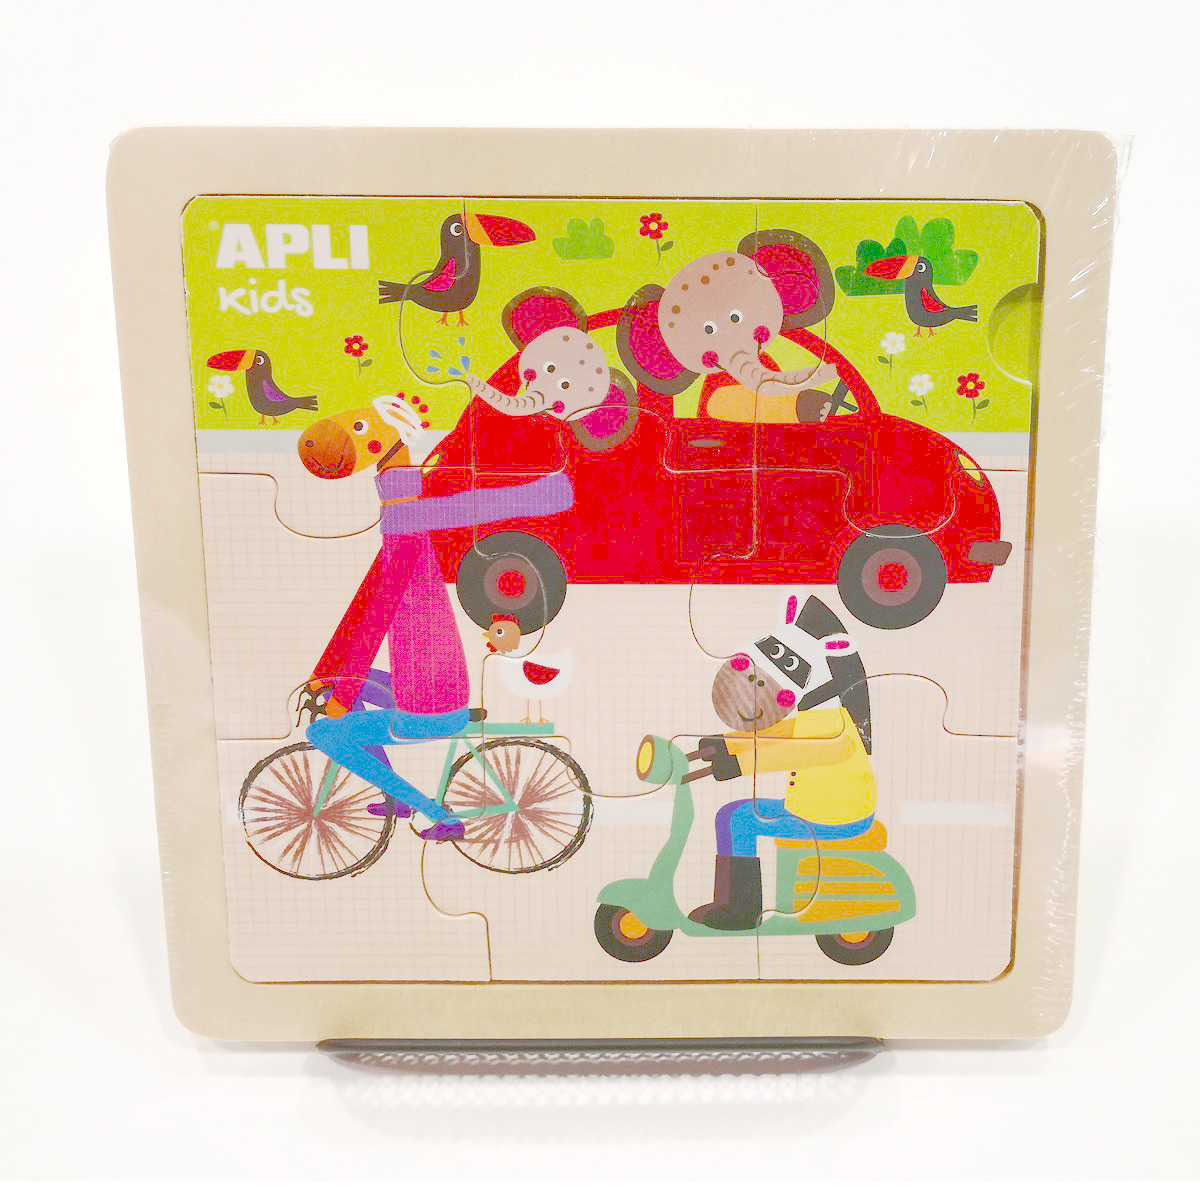 Apli Kids Wooden Puzzle 15x15 9pcs 3+ (15184)